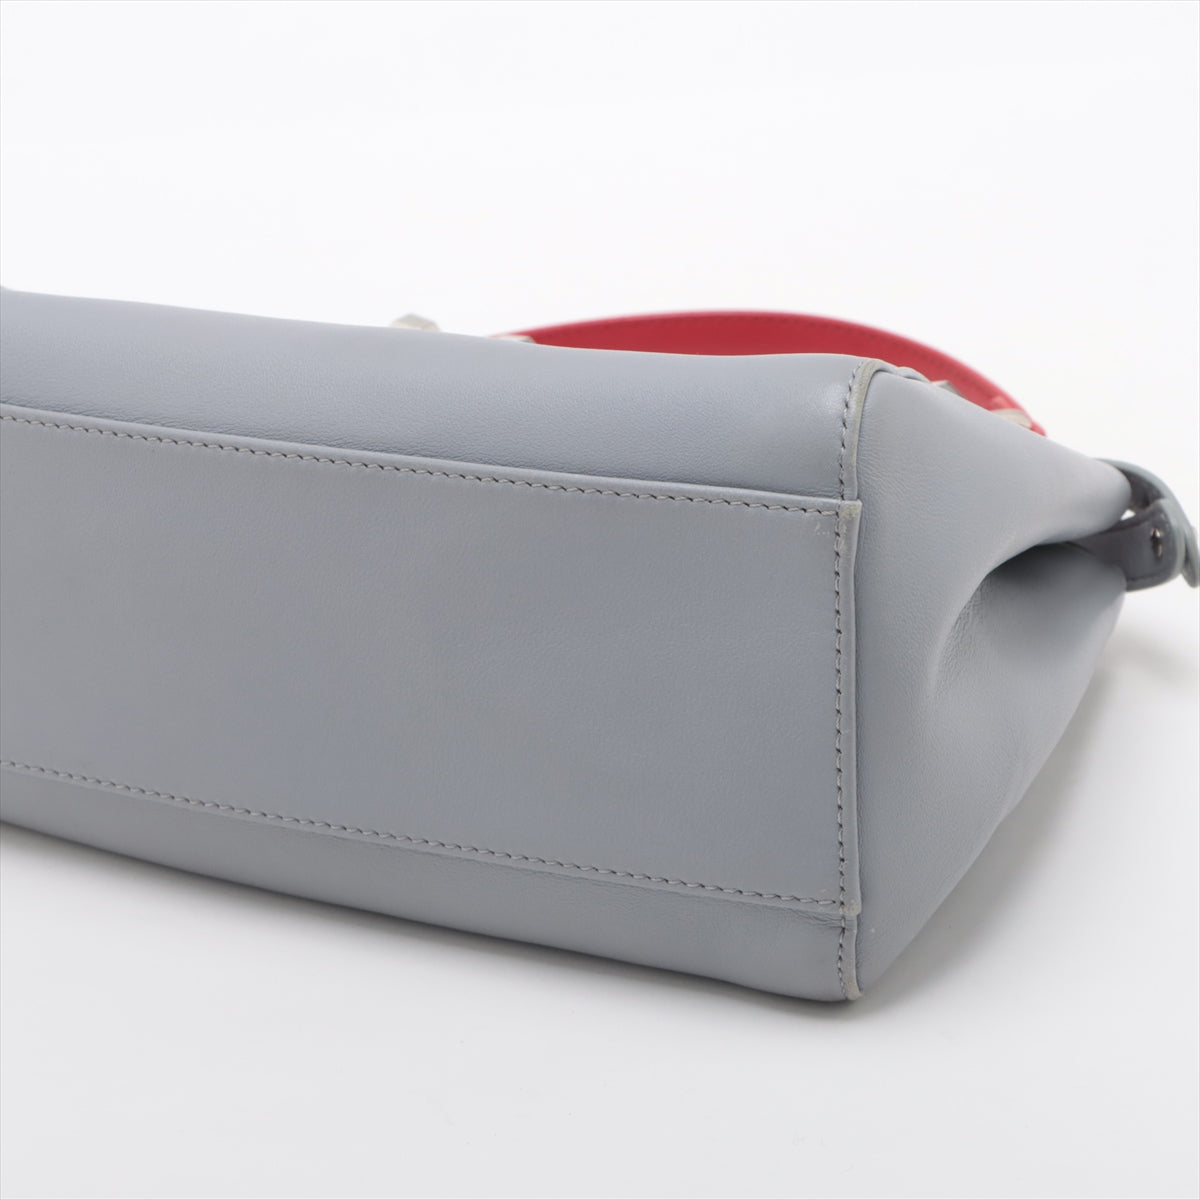 Fendi Mini Peek-a-boo Leather 2way handbag Gray x red 8BN244